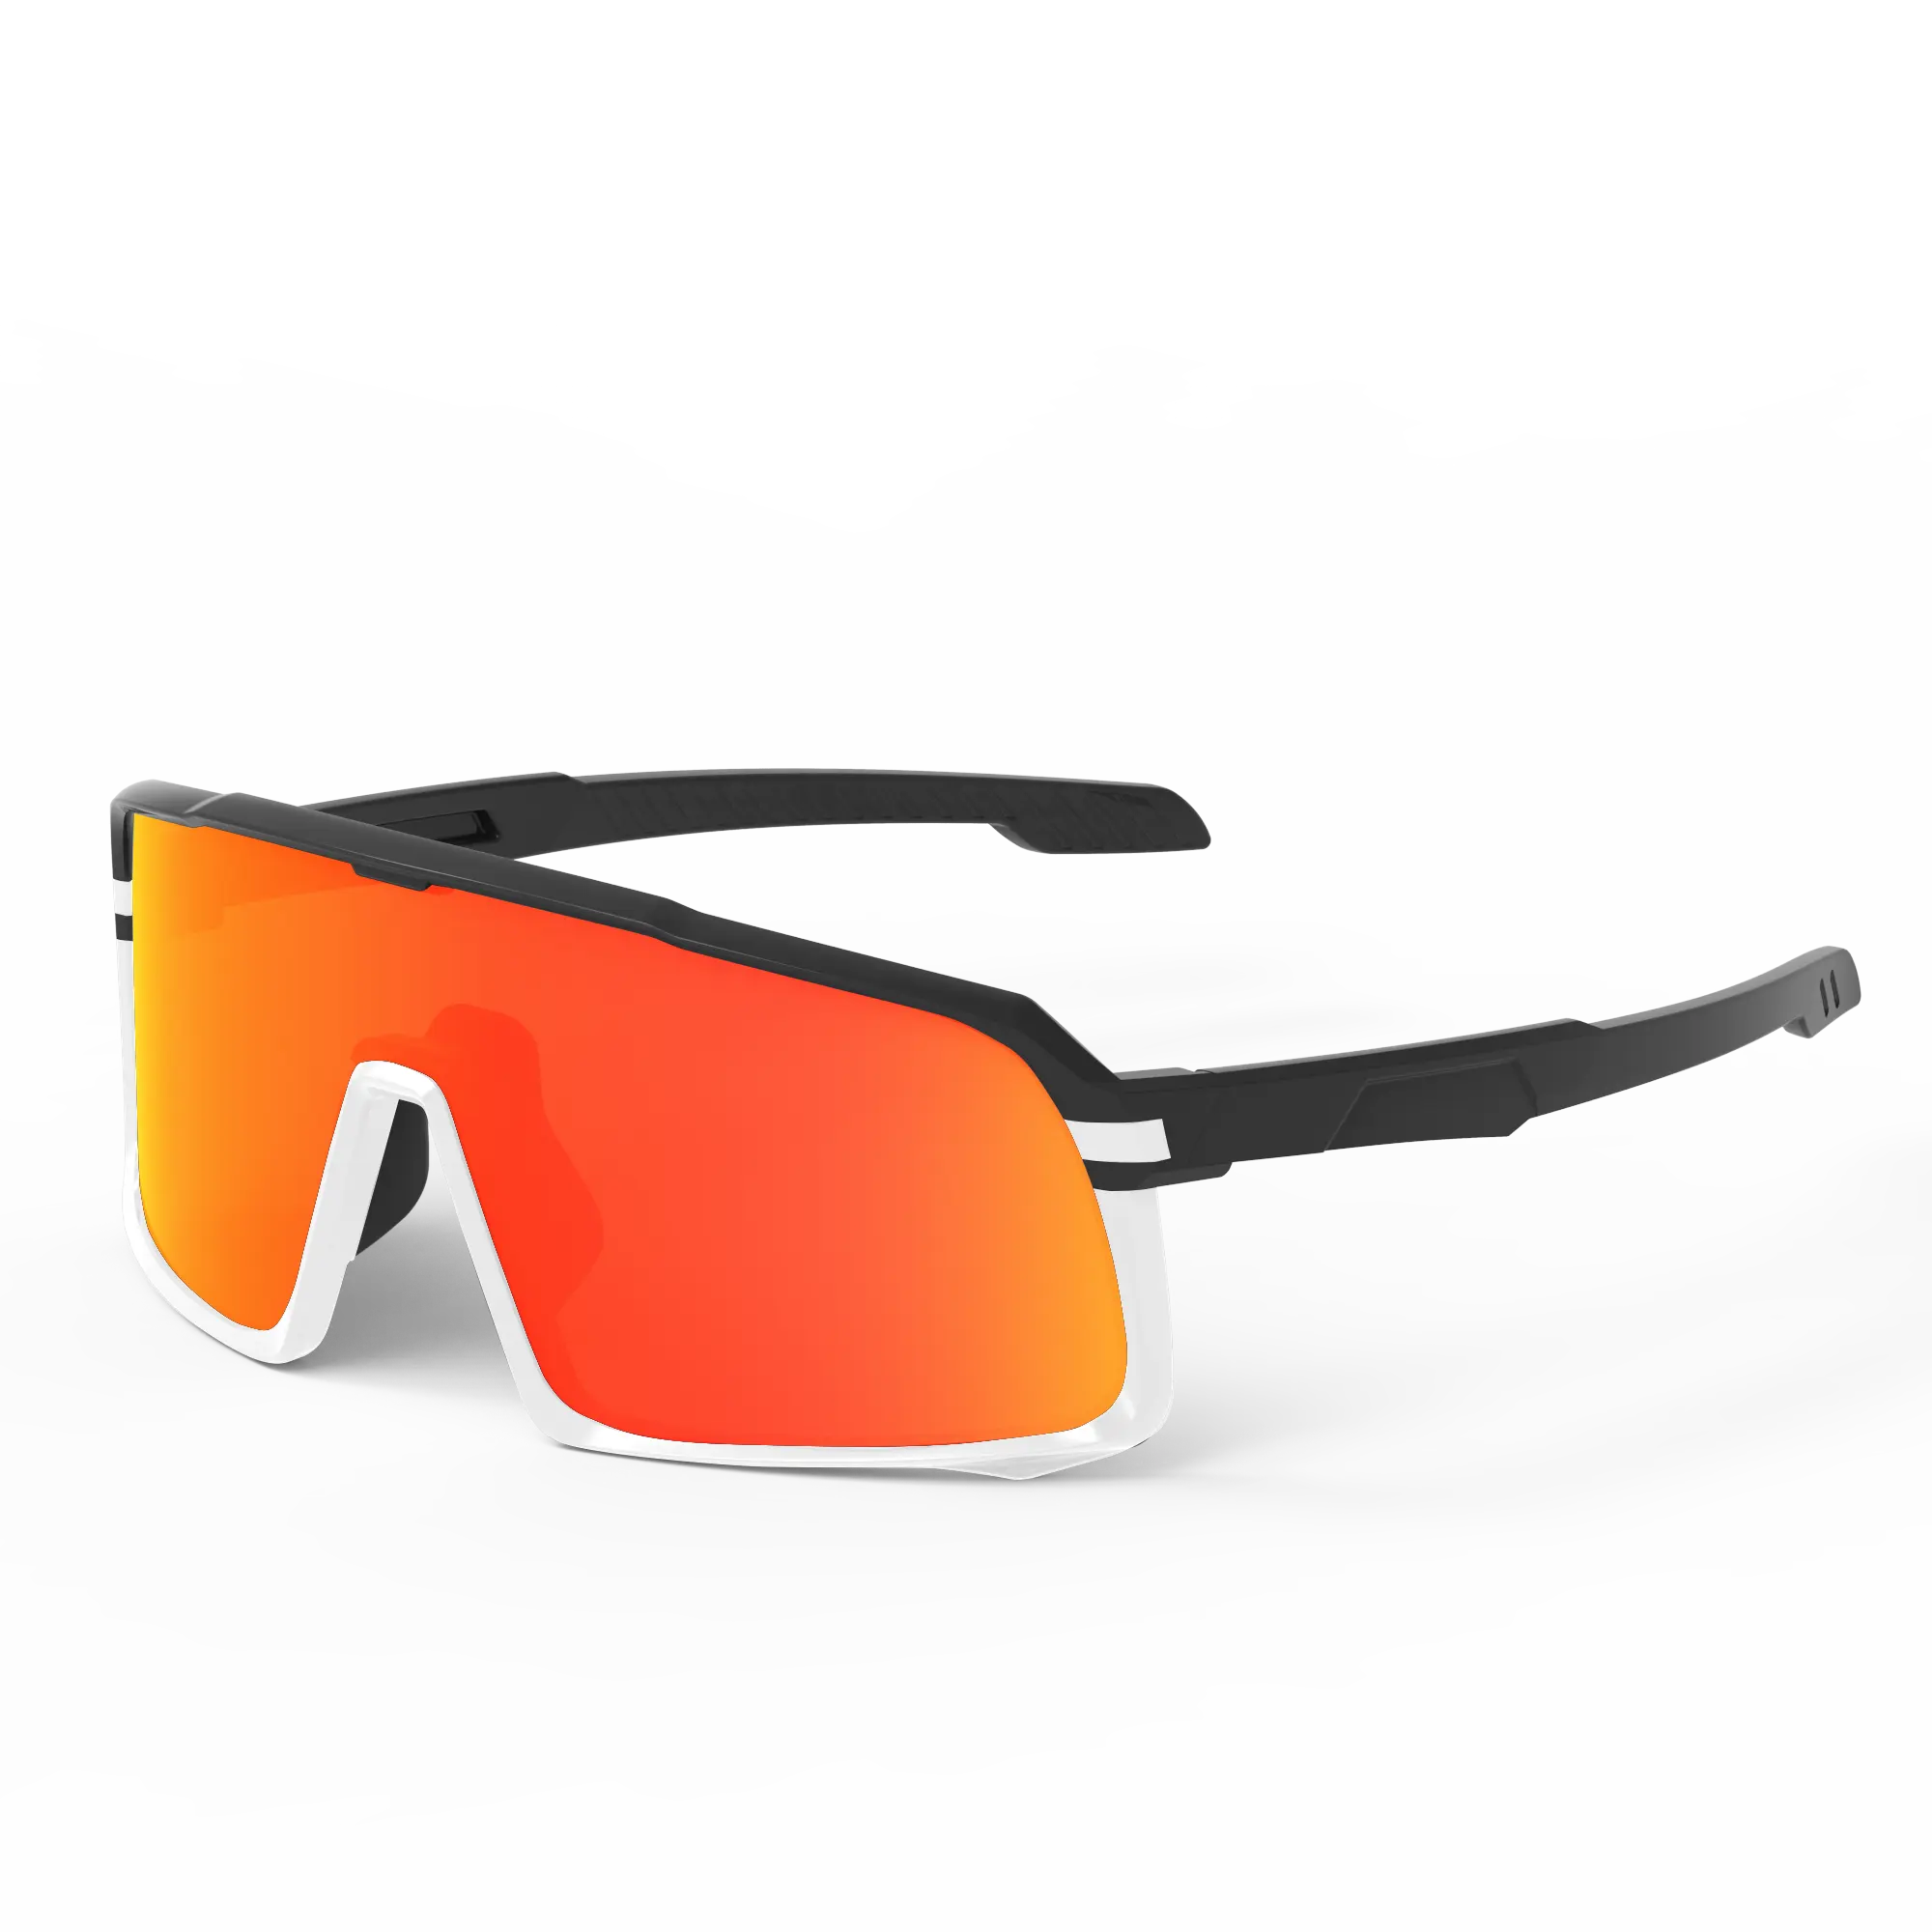 Gafas de sol deportivas polarizadas para bicicleta, lentes intercambiables, personalizadas